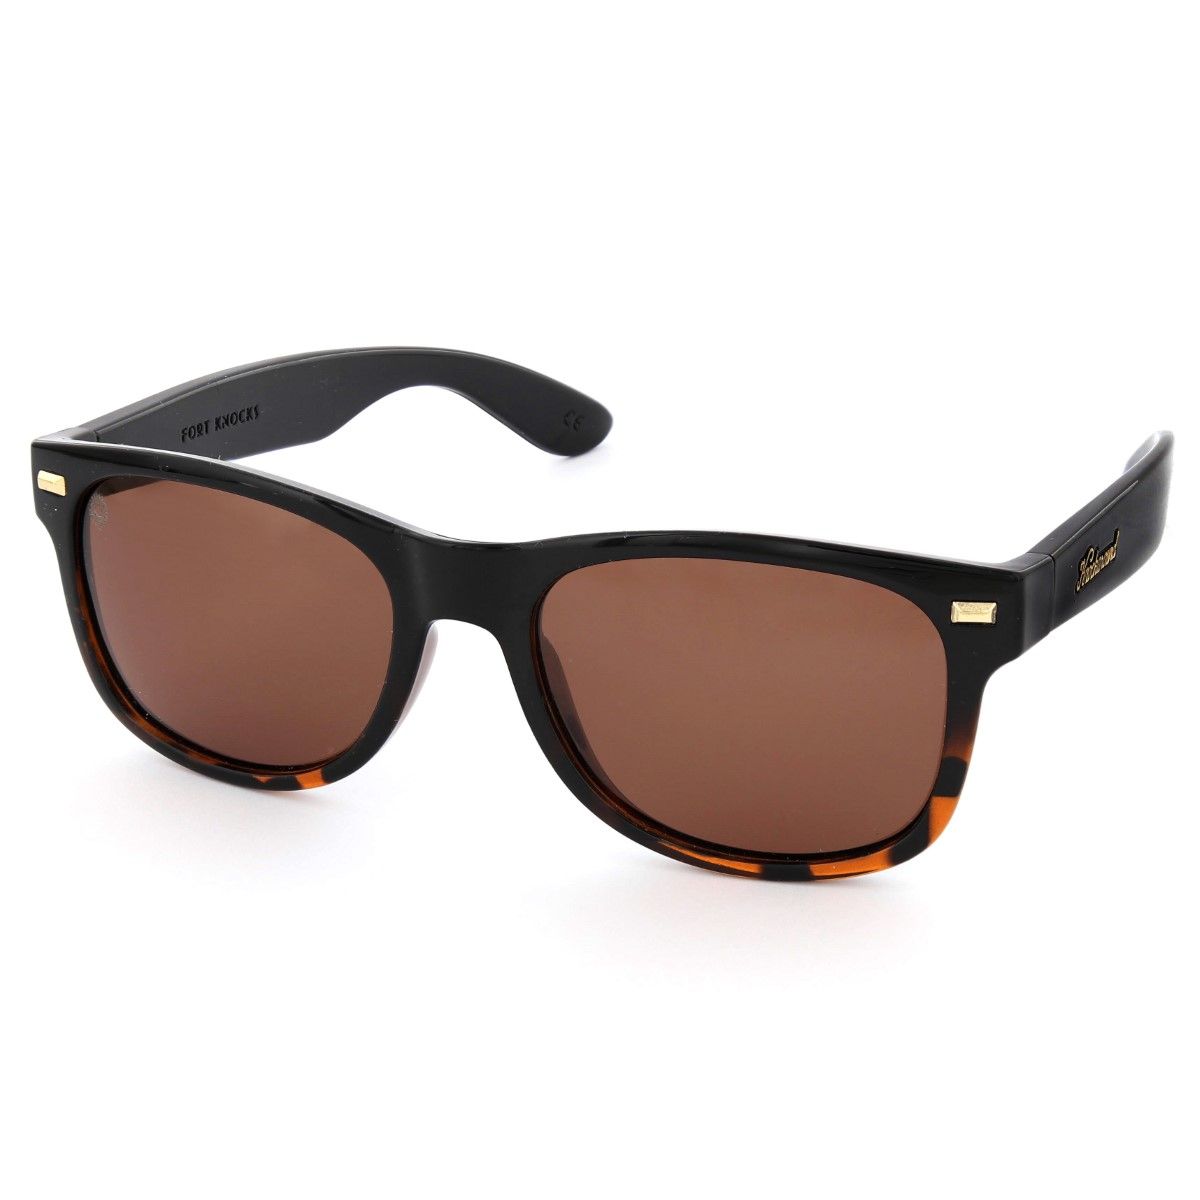 Knockaround Glossy Black And Tortoise Shell Fade/Polarized Amber Fort Knocks Unisex Sunglasses